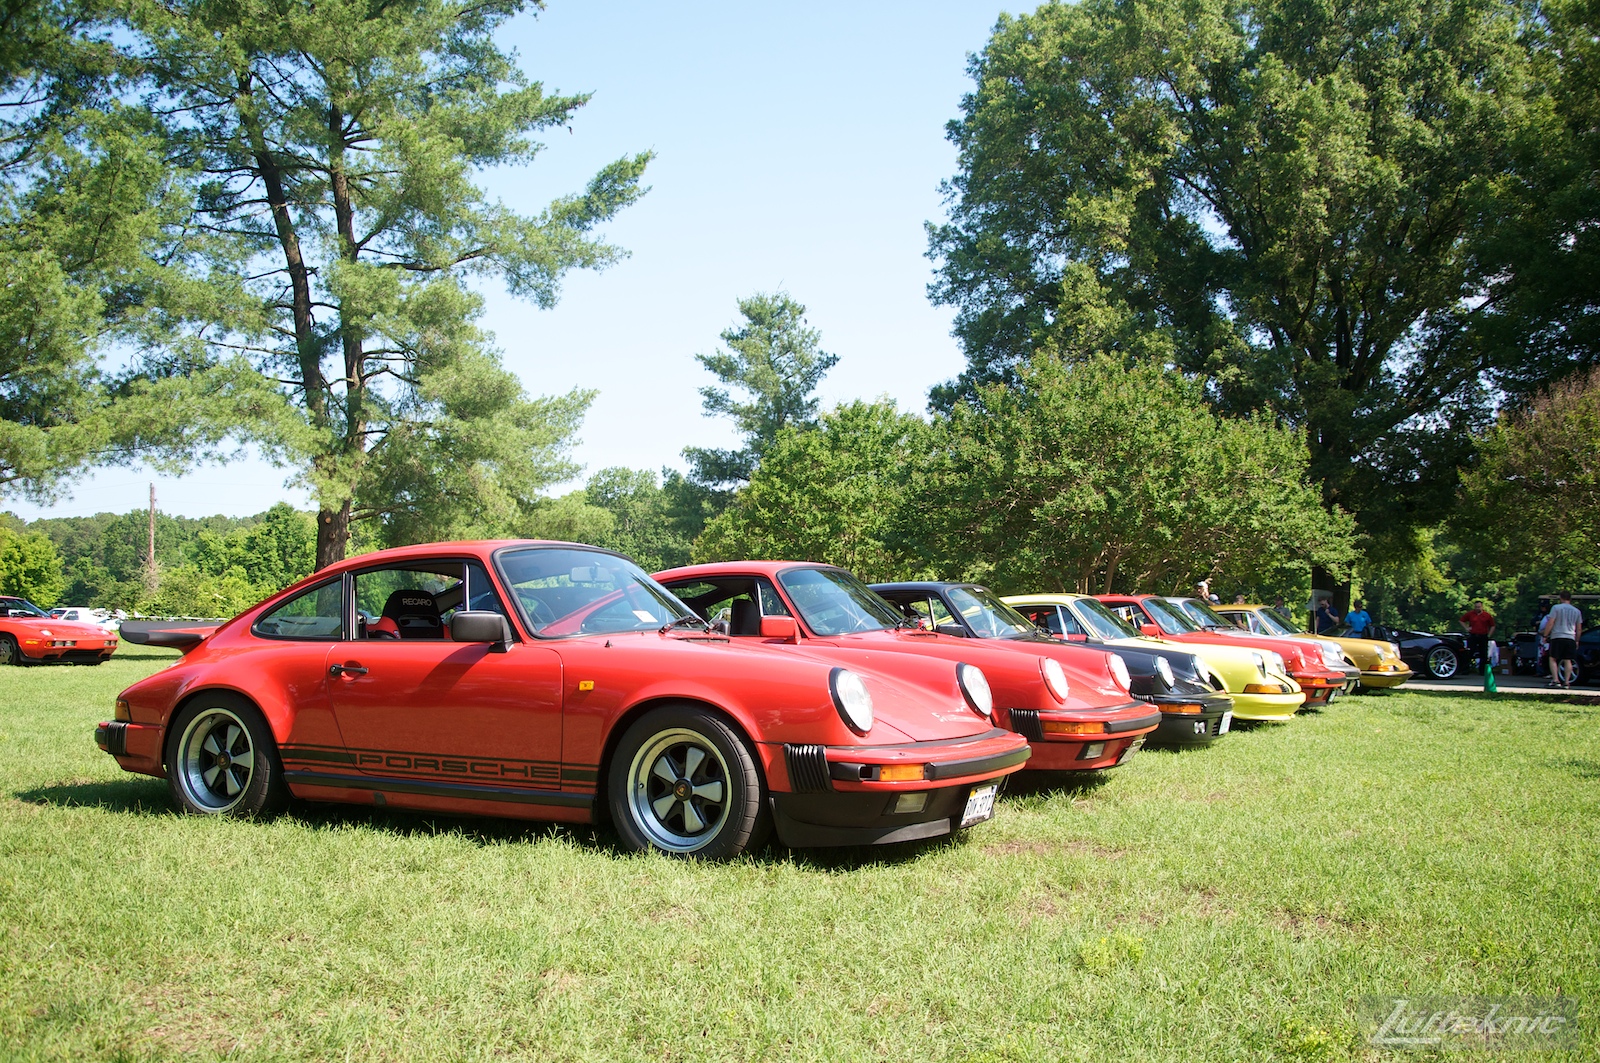 A row of Porsche 911s at the Richmond Porsche Meet.